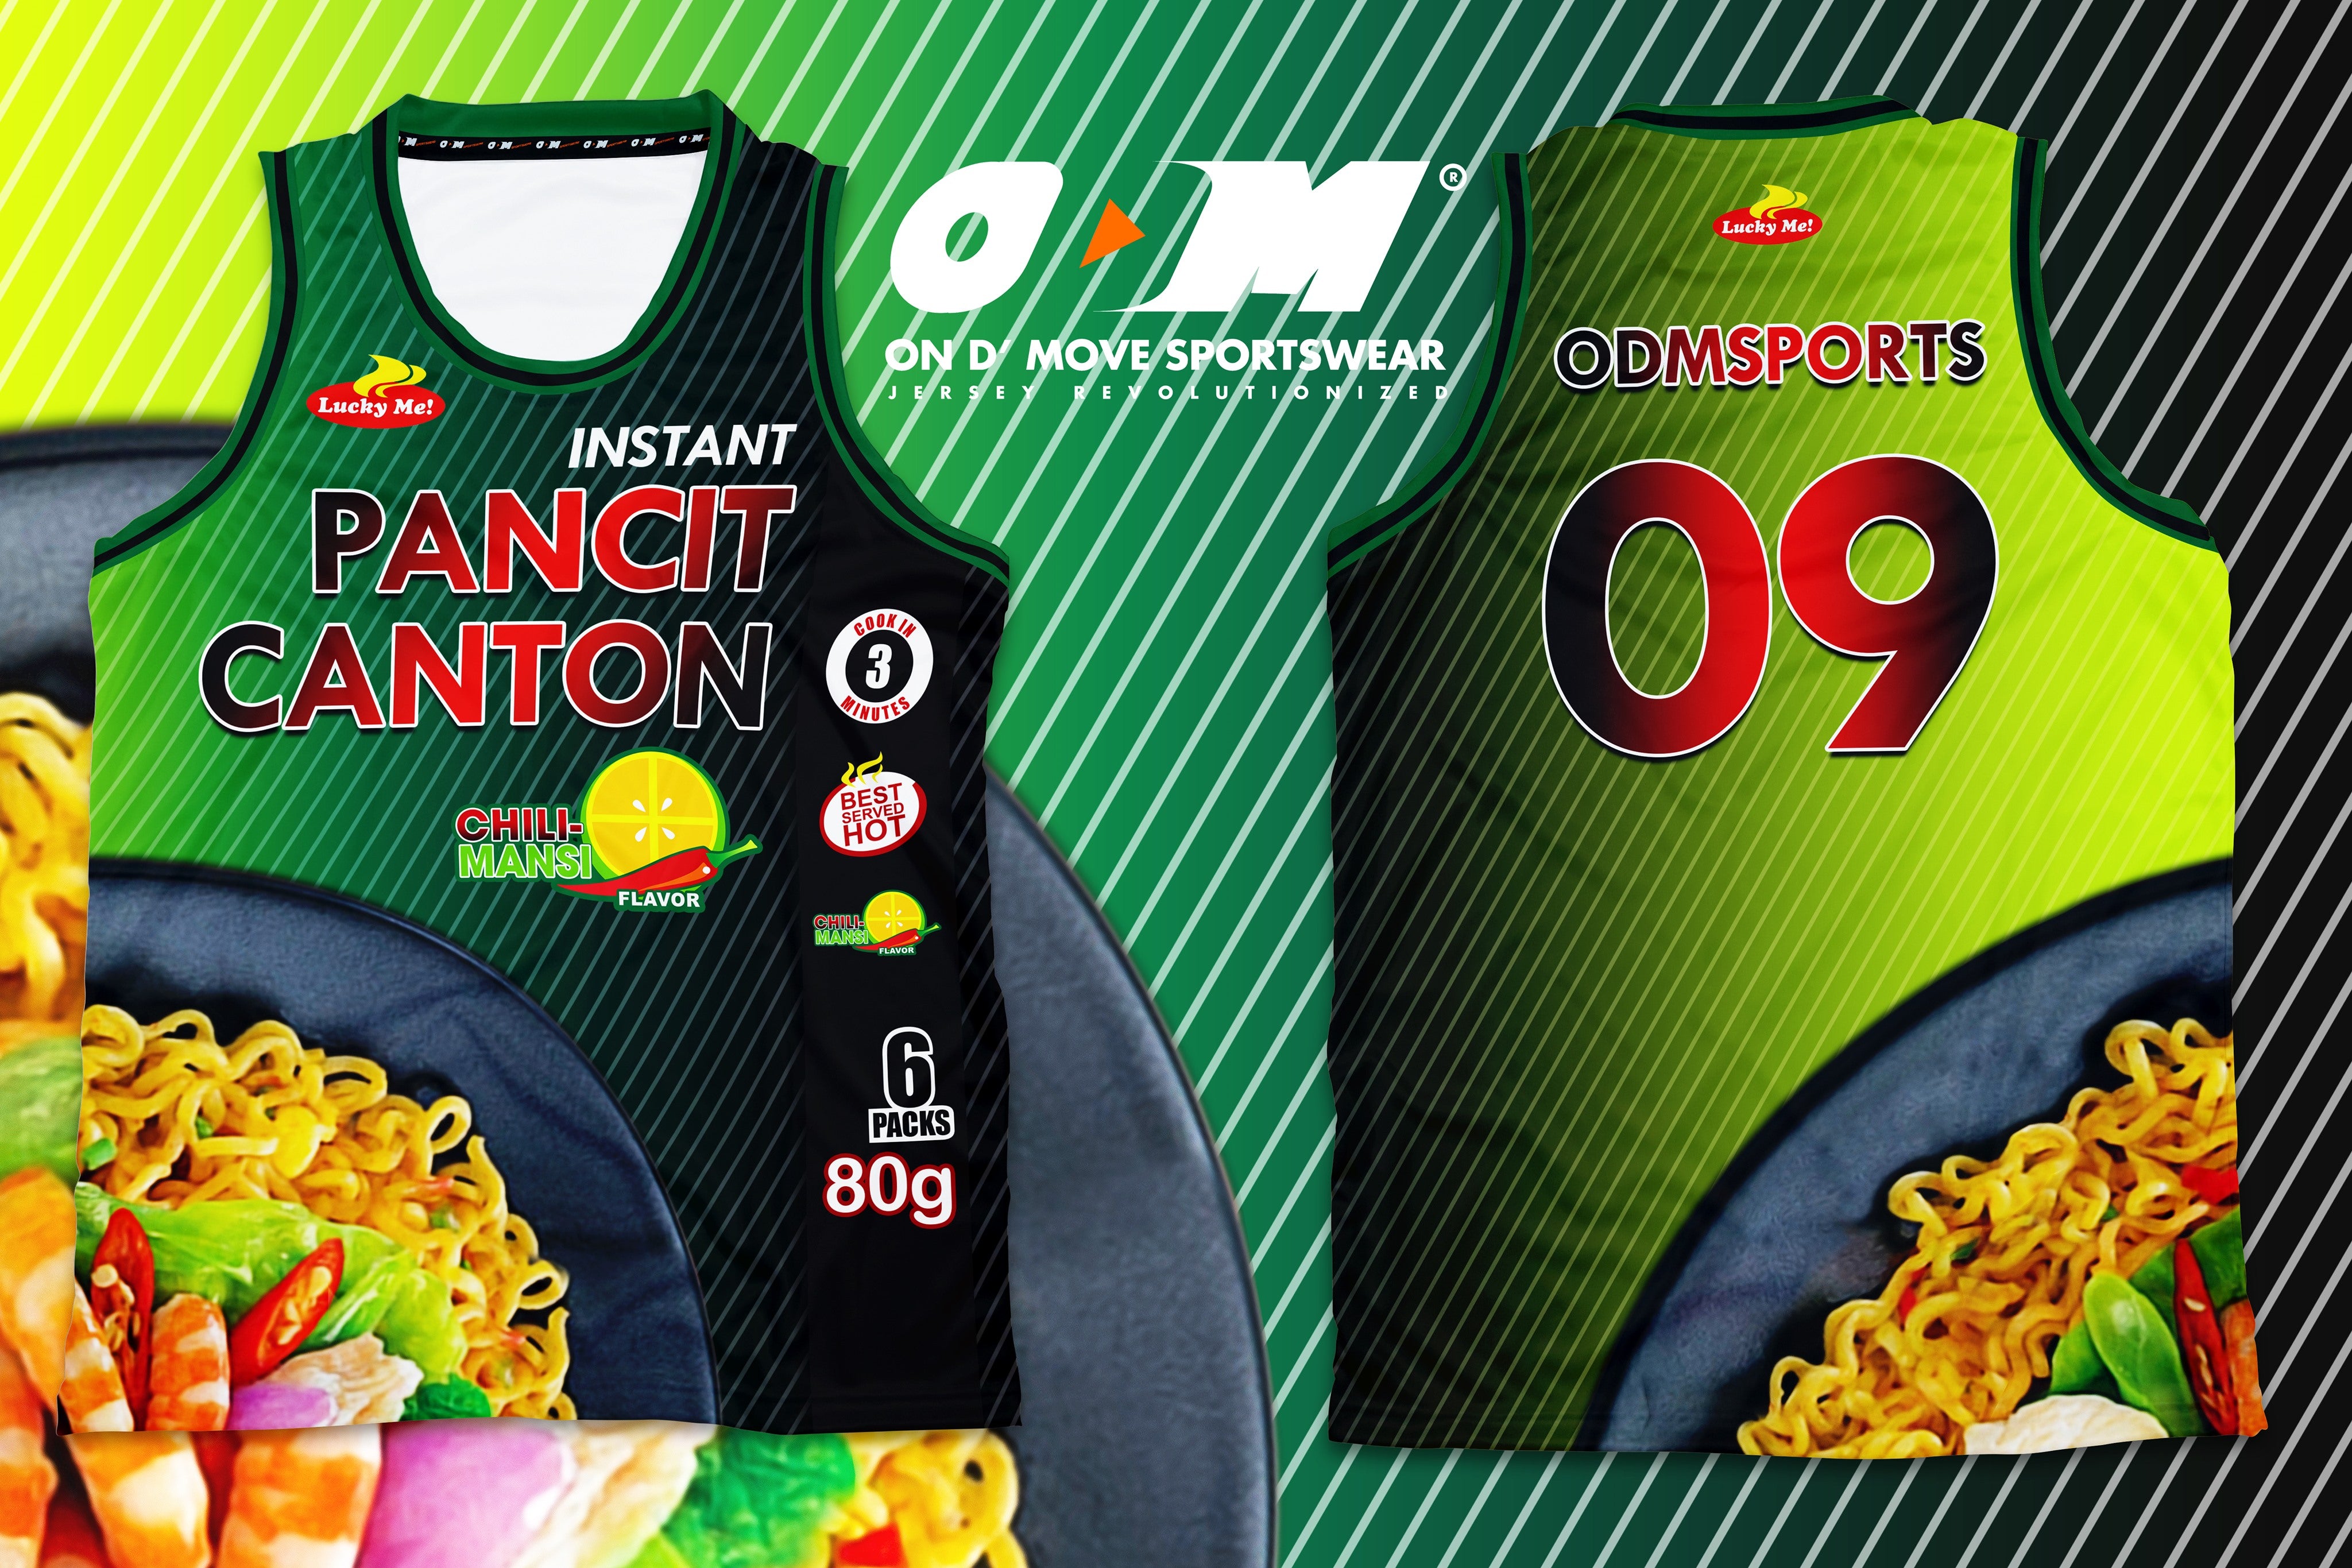 Pancit Canton Original Shirt – On D' Move Sportswear